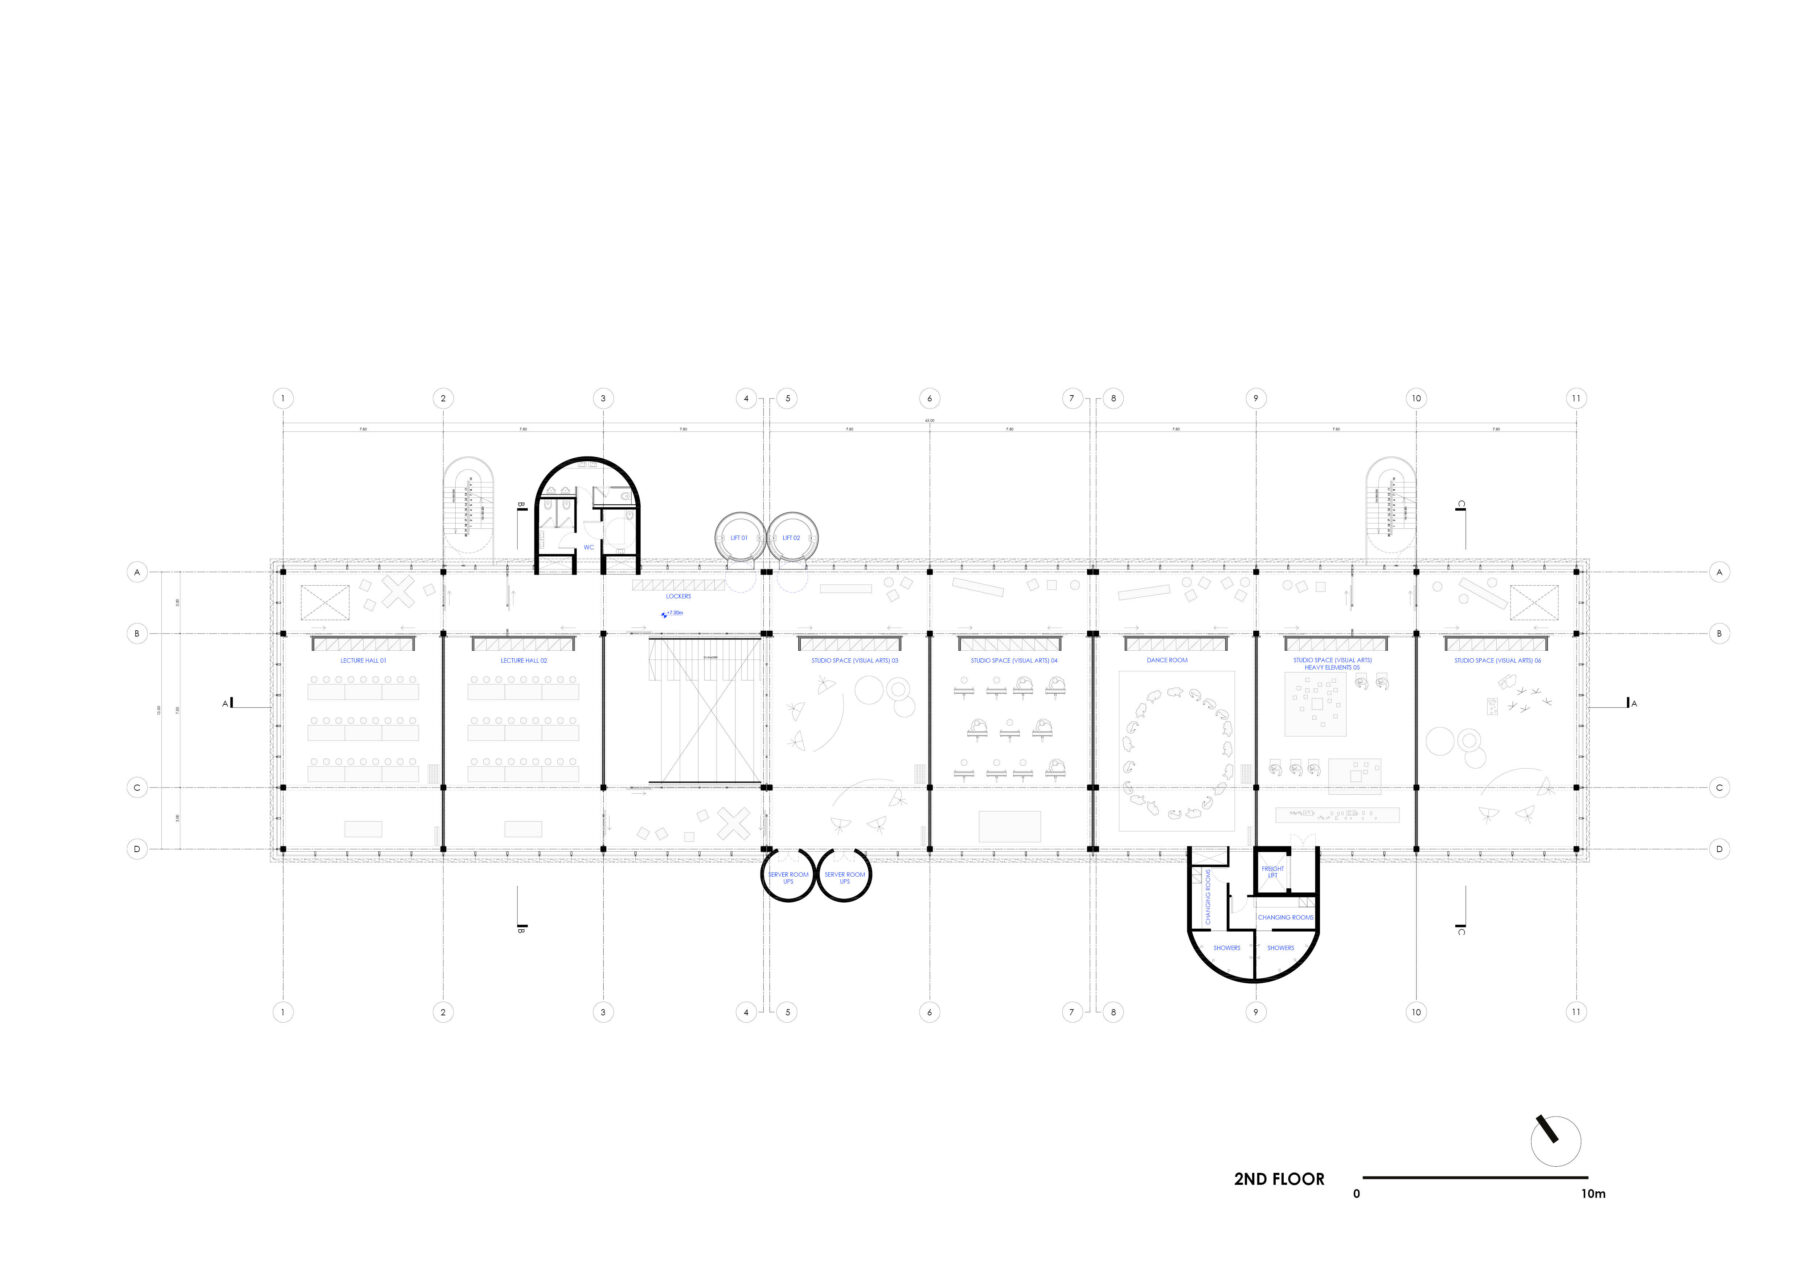 Archisearch THE ART CONTAINER - Πρόταση της ομάδας των ANAGRAM A-U & GRUPPA STUDIO για το Κτίριο Τεχνών Δ. Δασκαλόπουλος